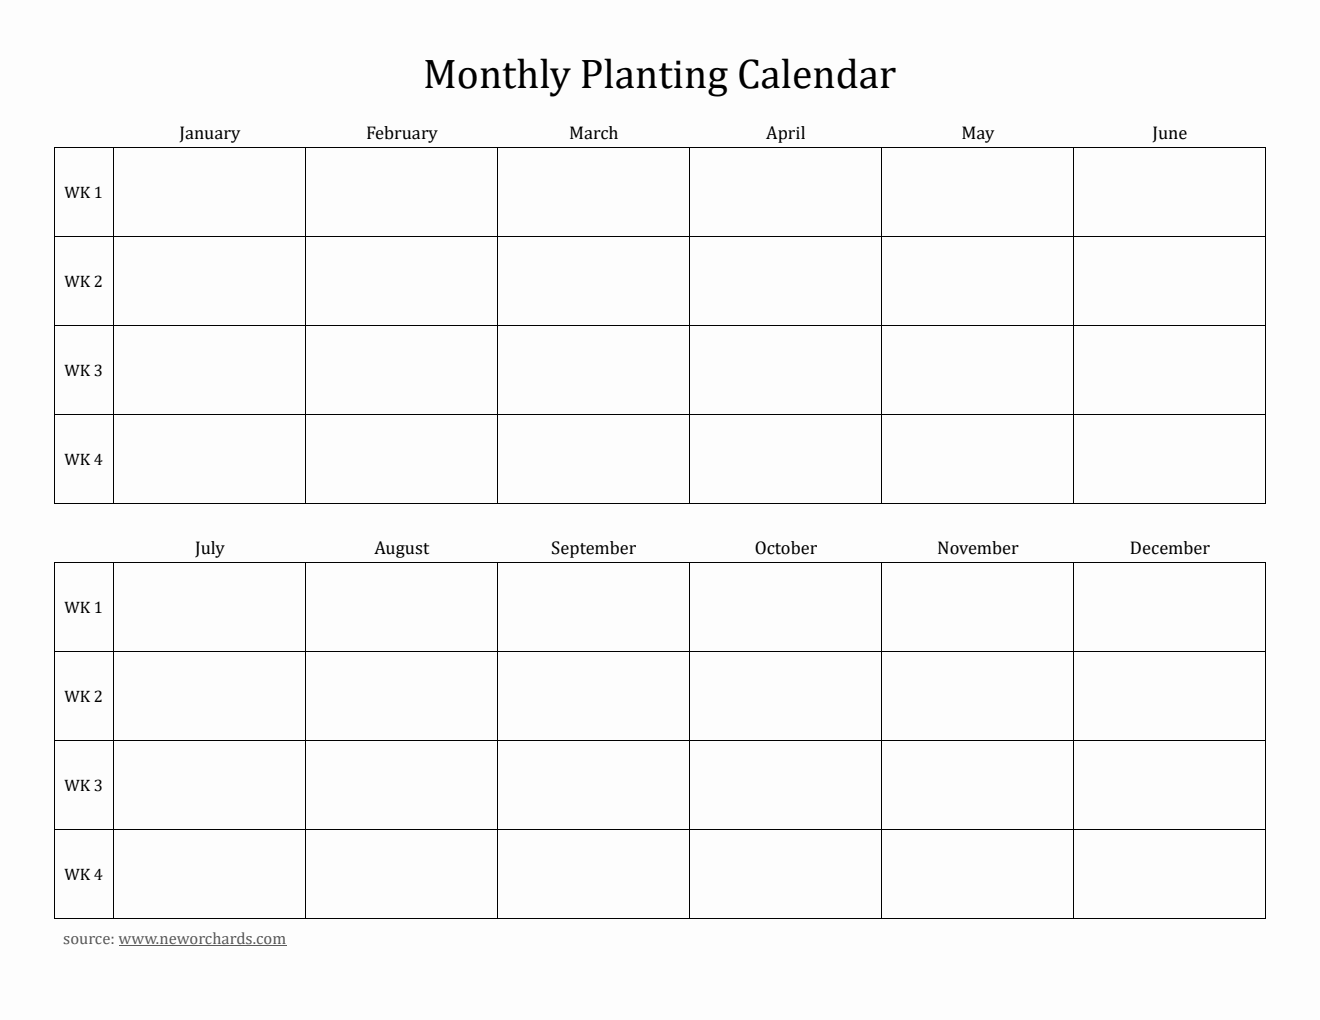 Blank Monthly Planting Calendar in PDF